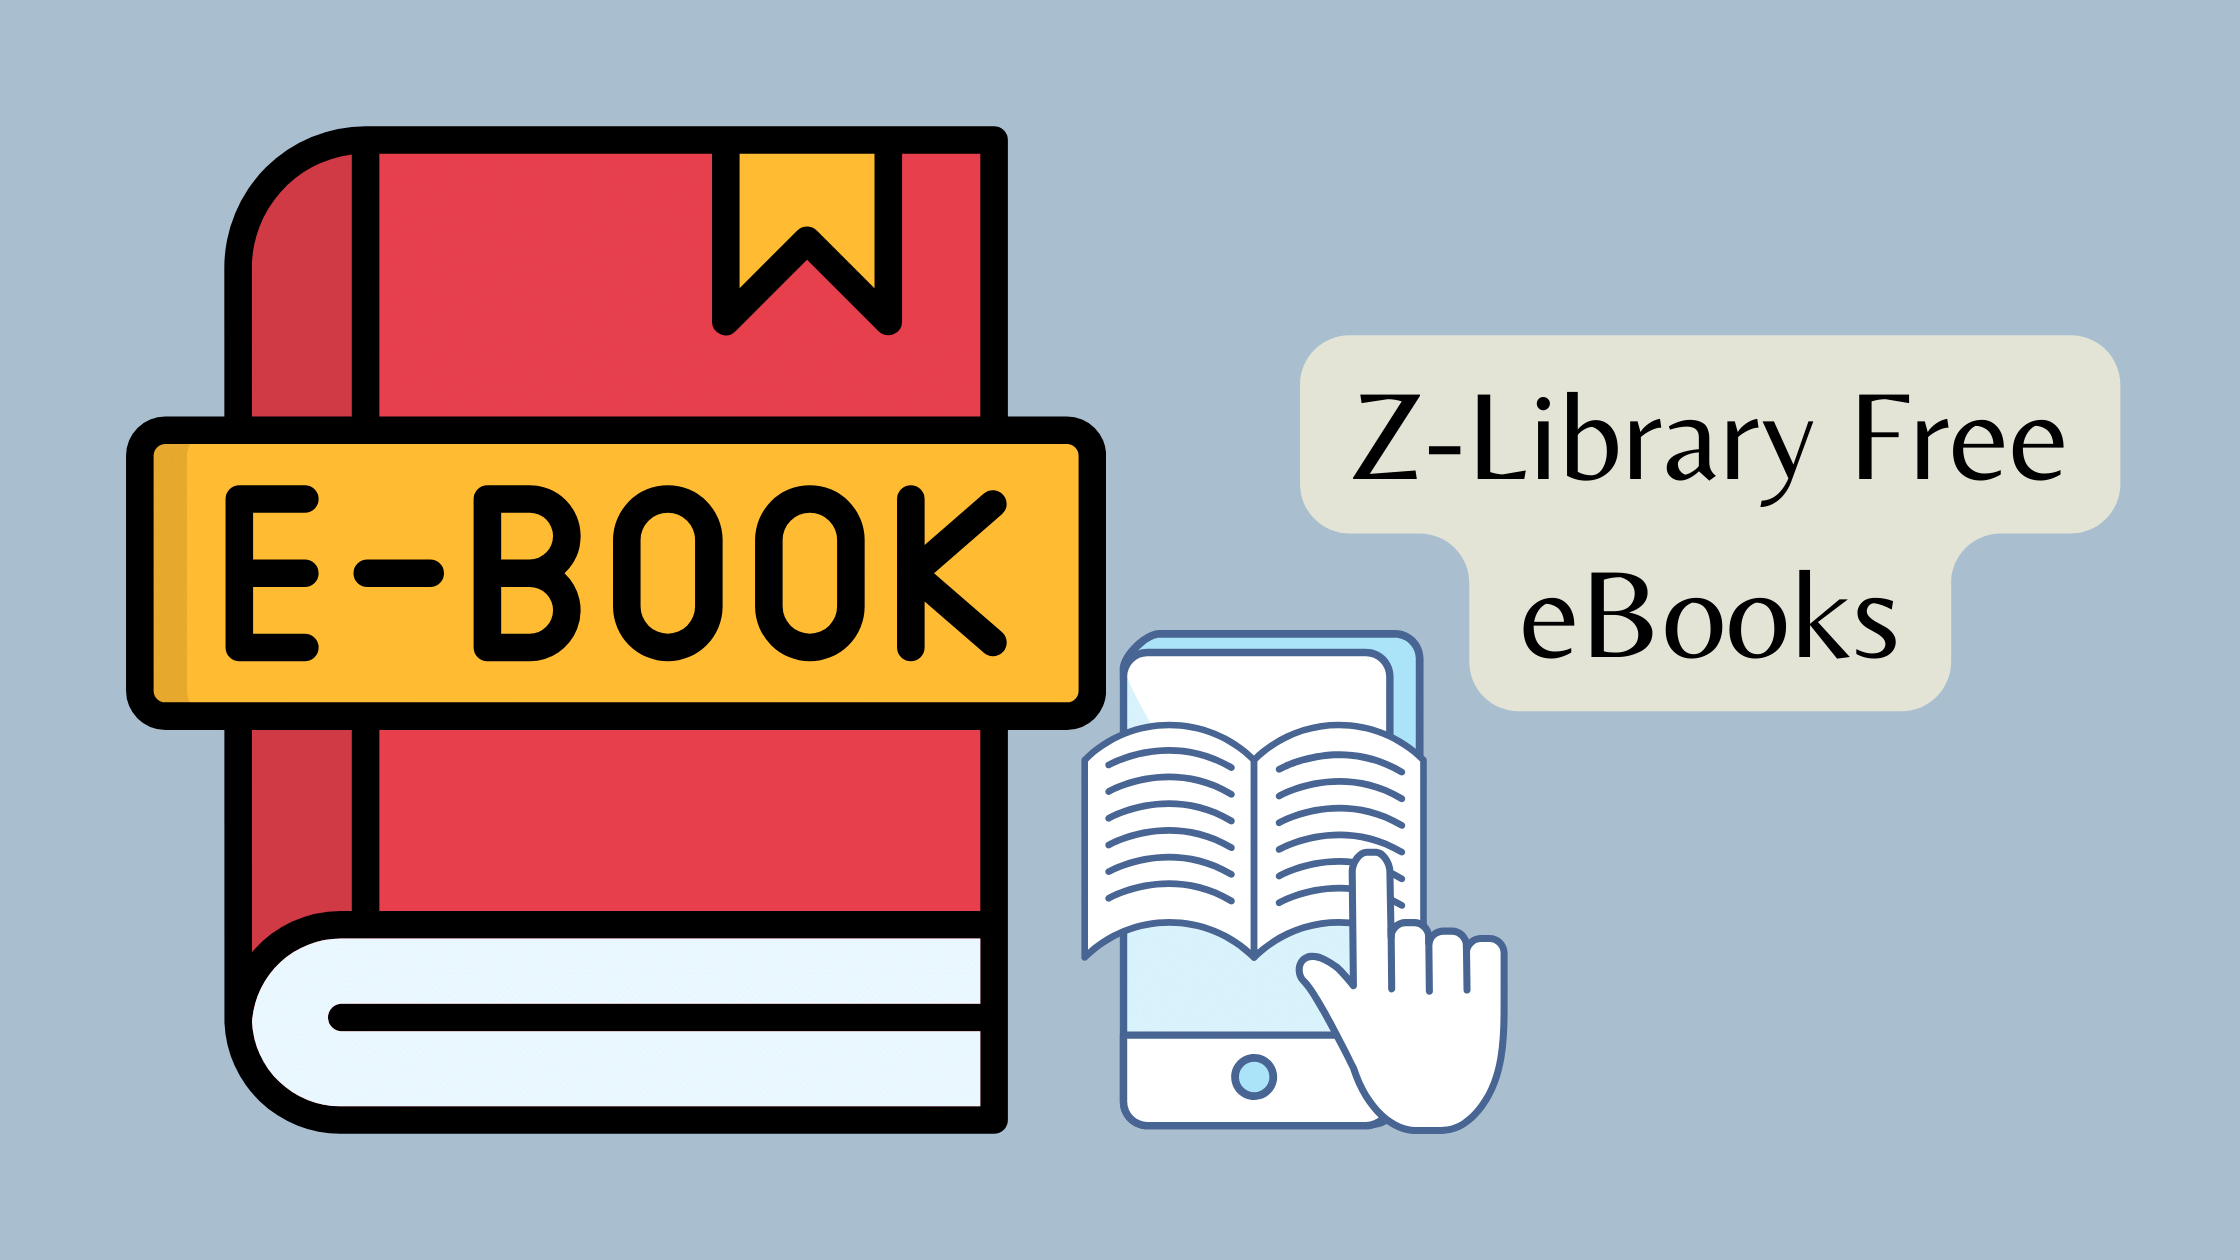 Z-Library Free eBooks